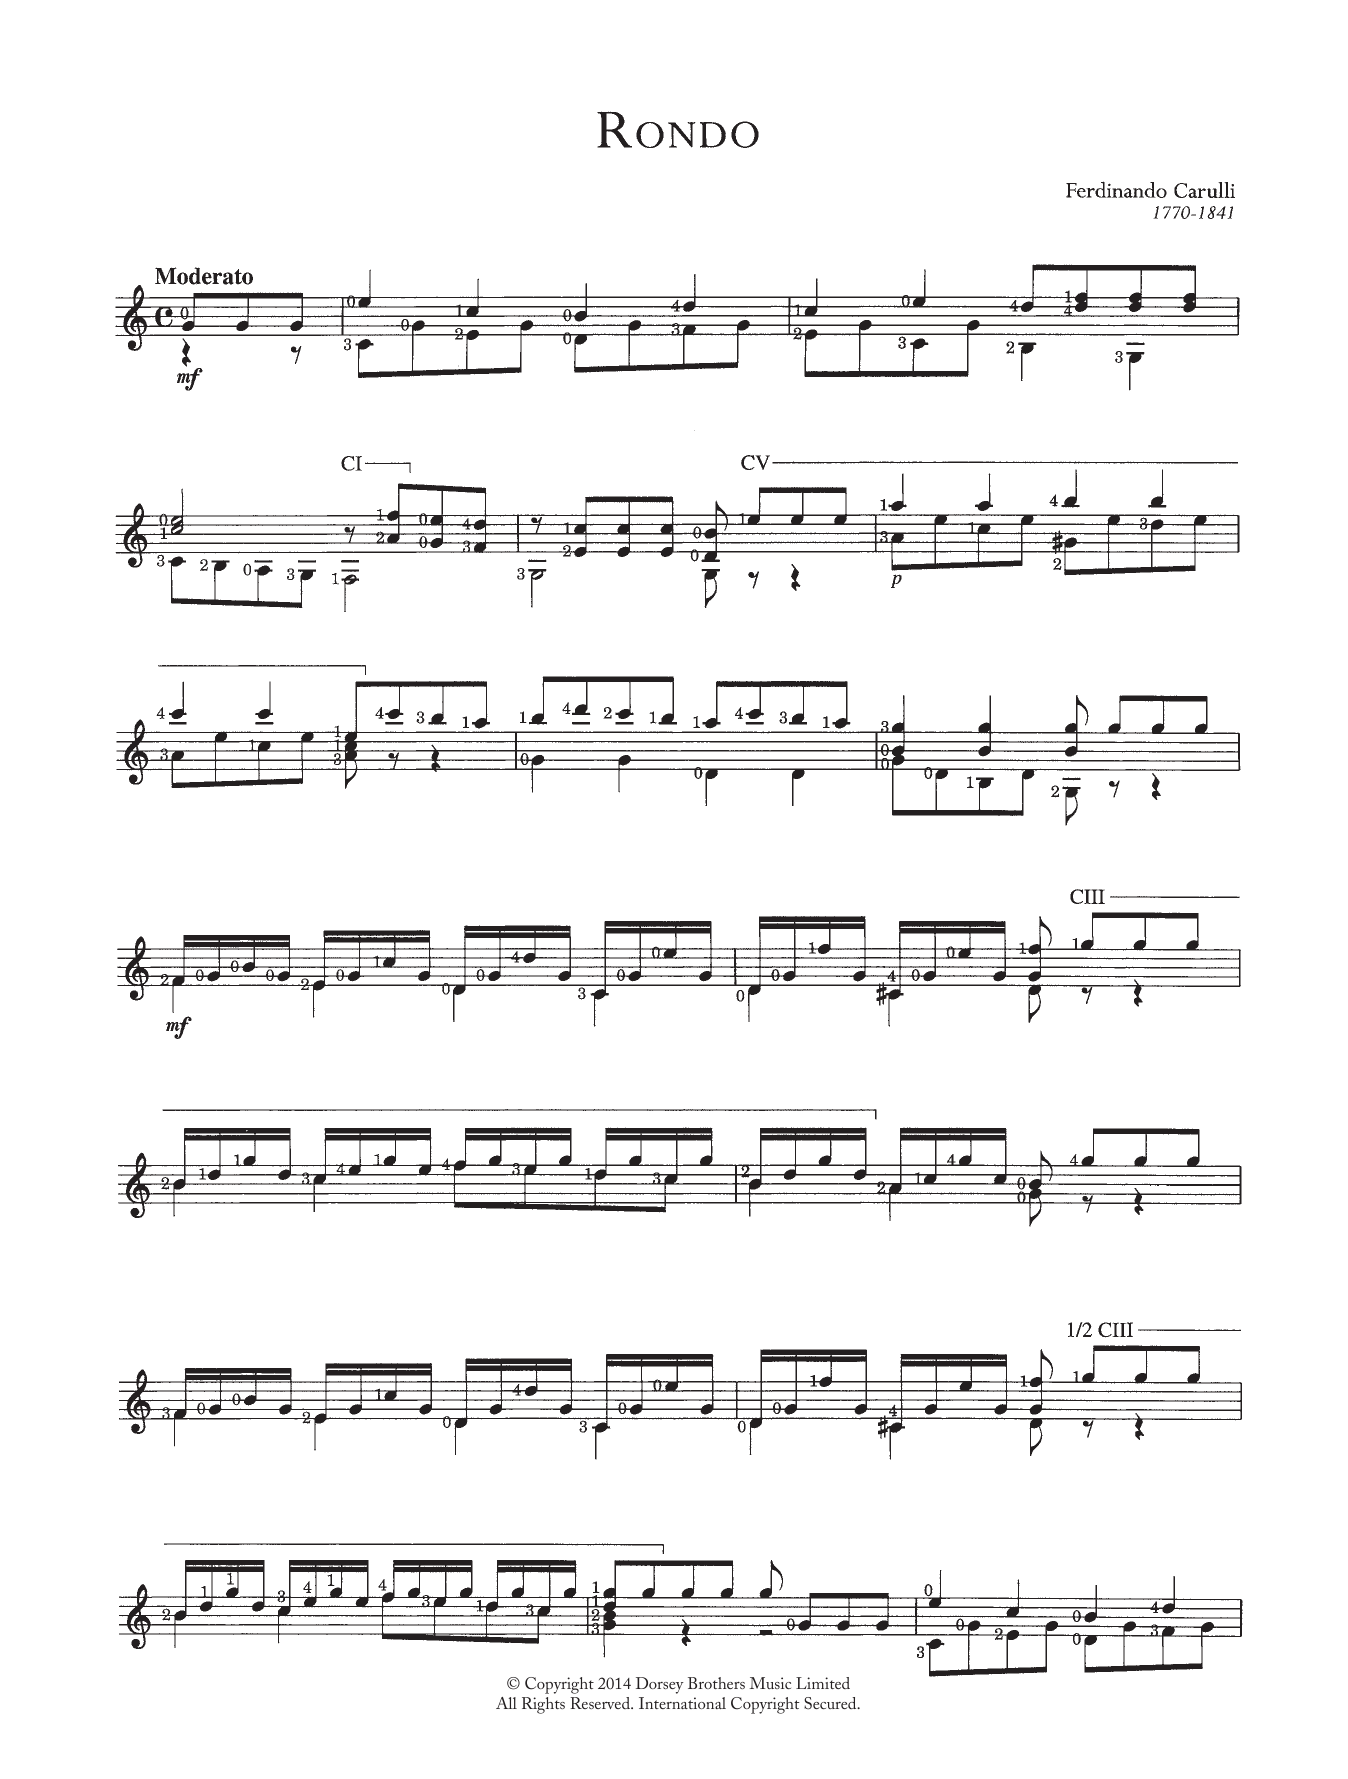 Ferdinando Carulli Rondo Sheet Music Notes & Chords for Solo Guitar - Download or Print PDF